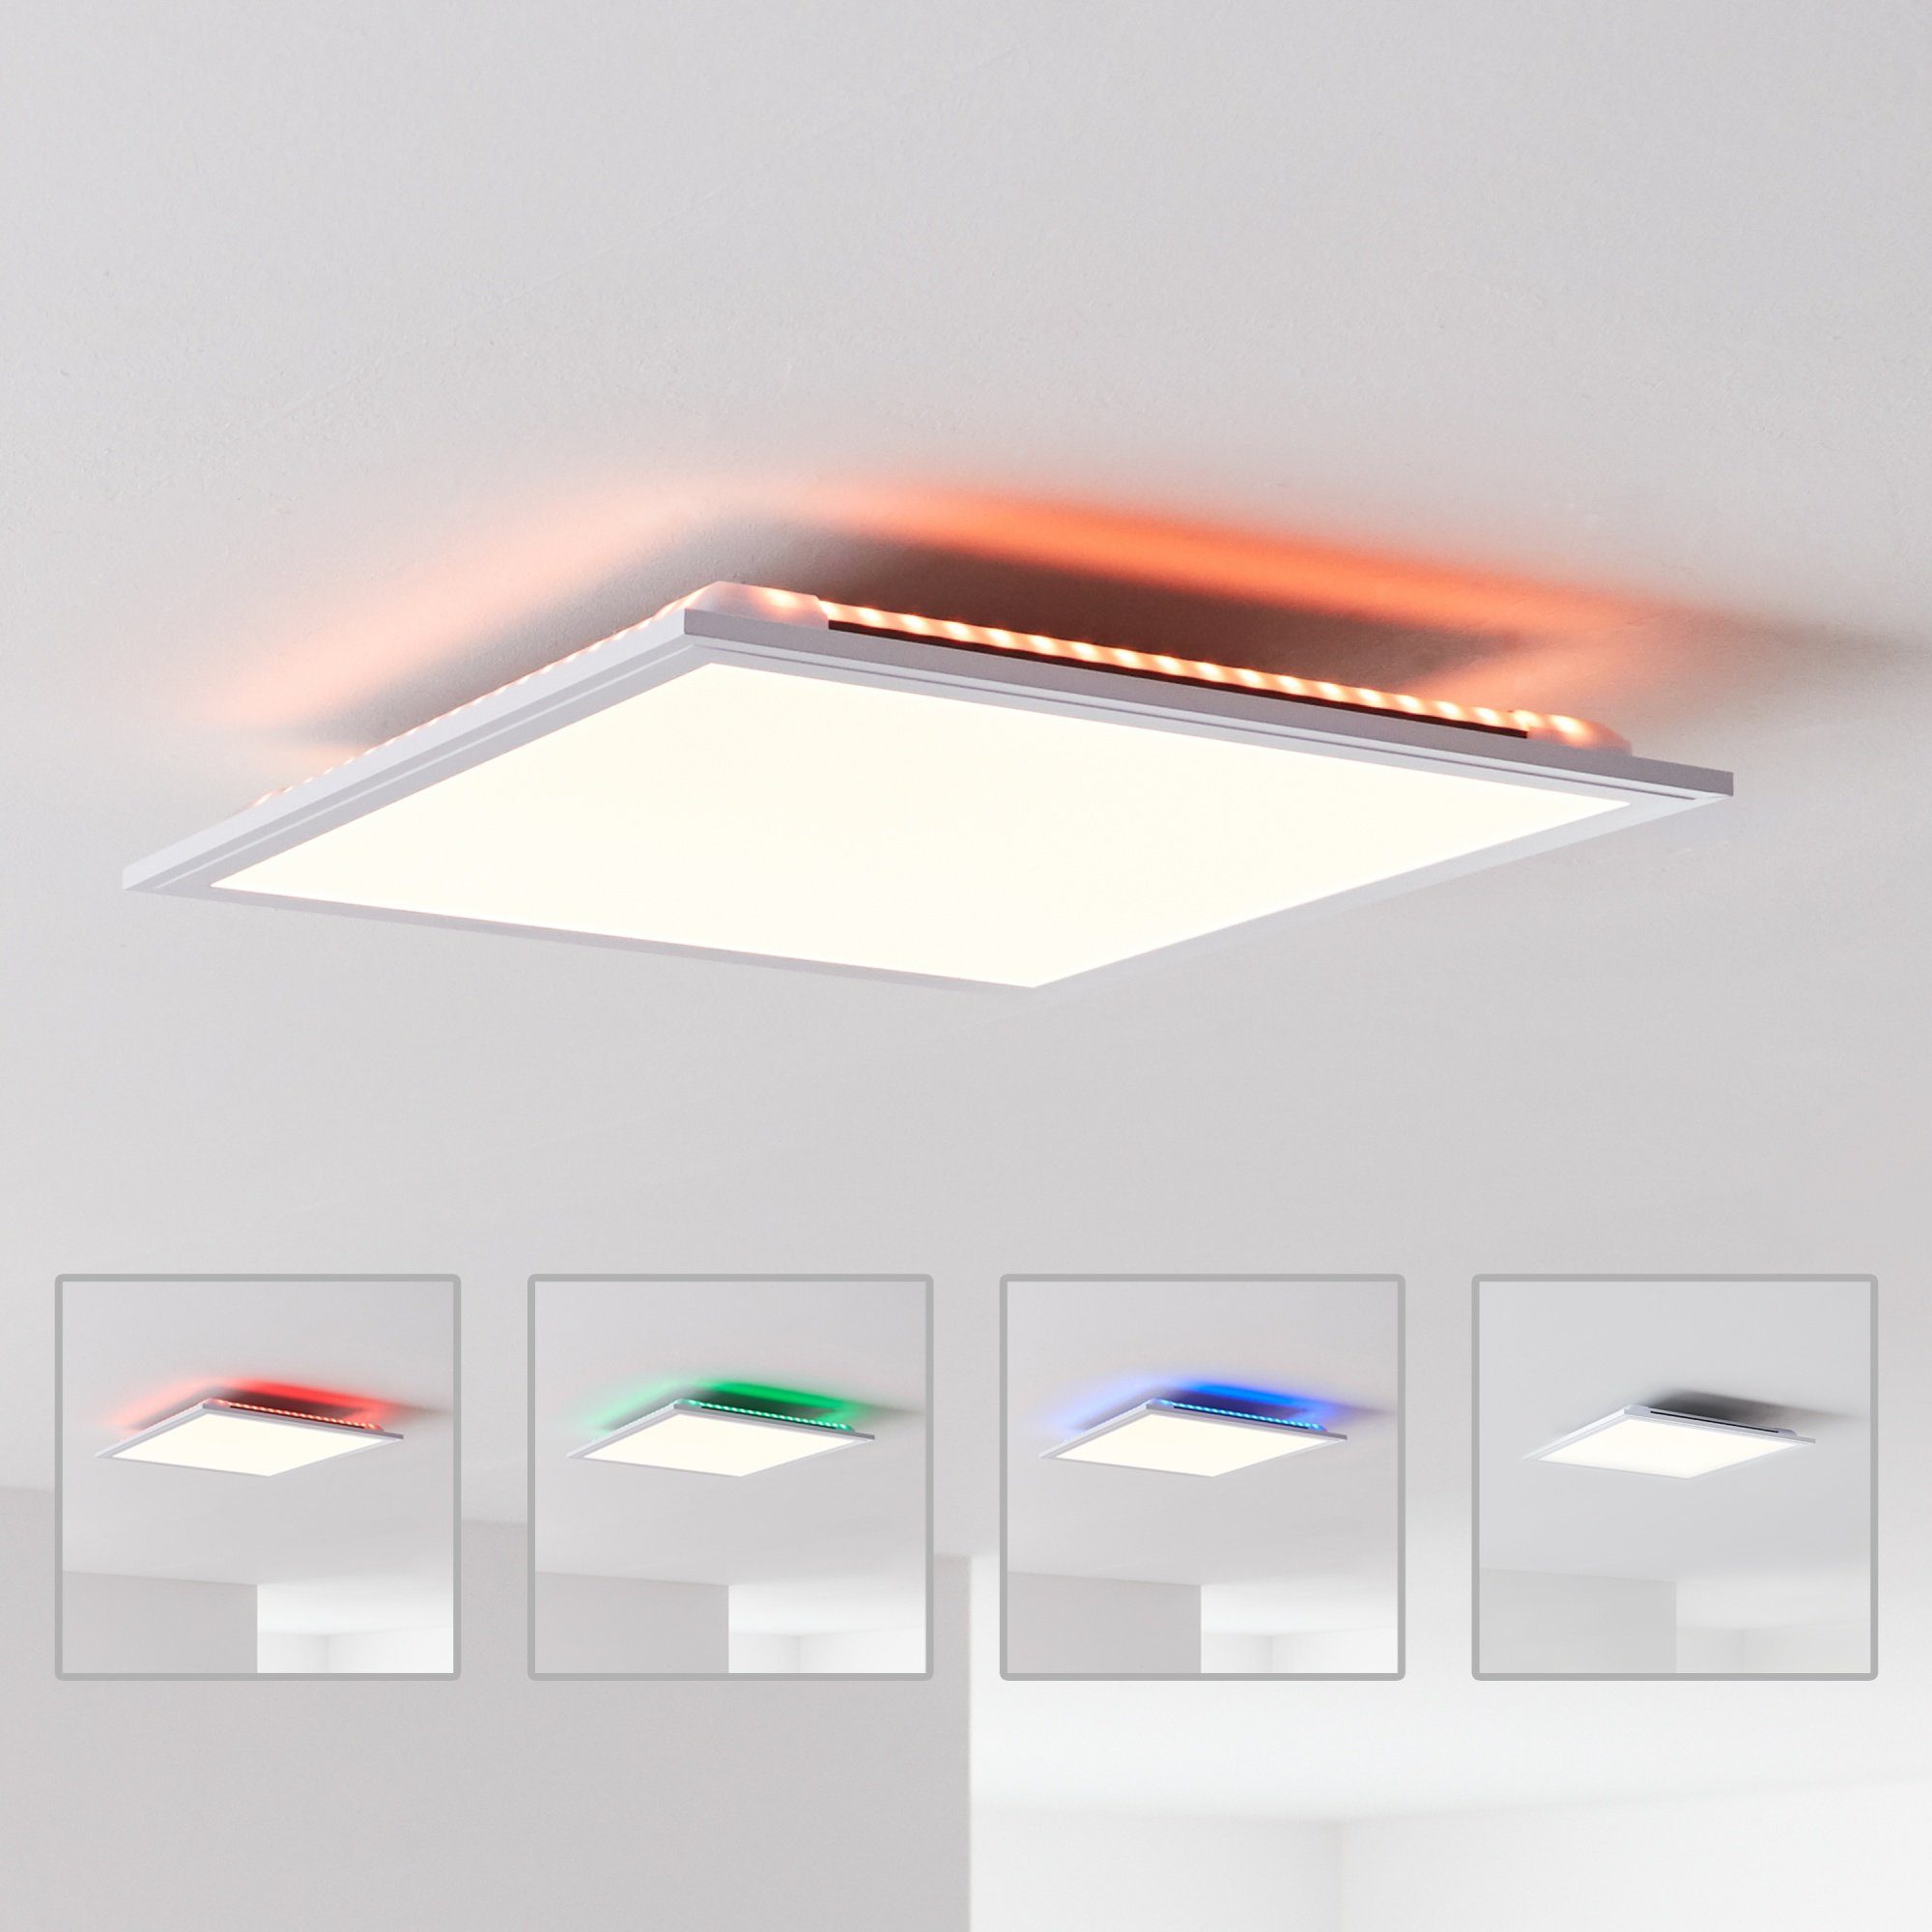 Lightbox LED Panel, CCT - über Fernbedienung, LED fest integriert, warmweiß - kaltweiß, dimmbar, 40 x 40 cm, RGB Backlight, Memoryfunktion über Wandschalter